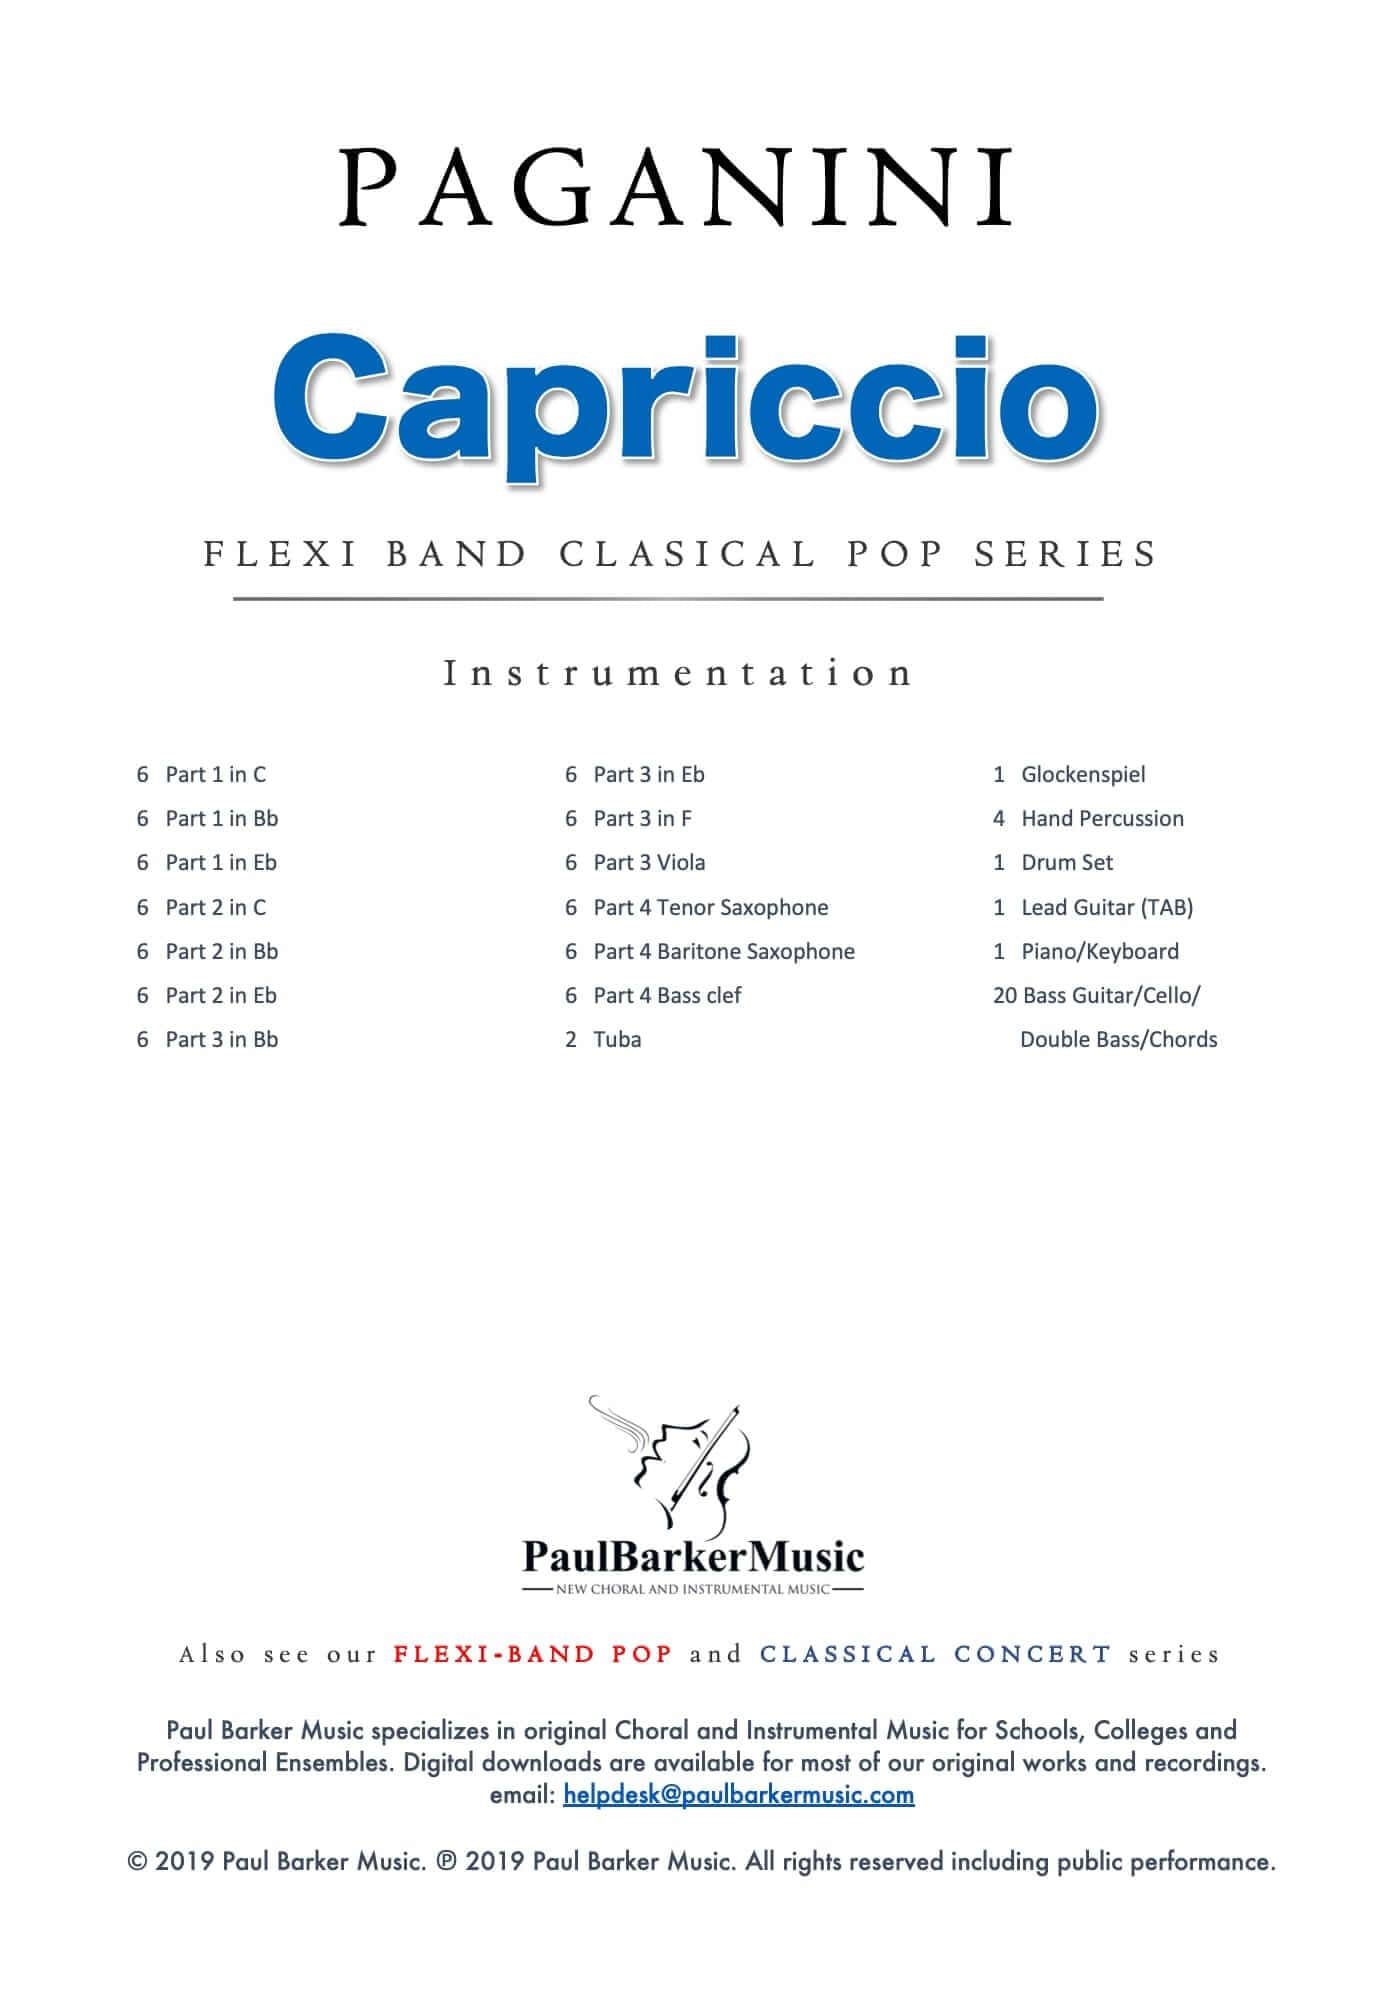 Flexi-Band Classical Pop Series - Multi-Bundle Value Pack 1 - Paul Barker Music 